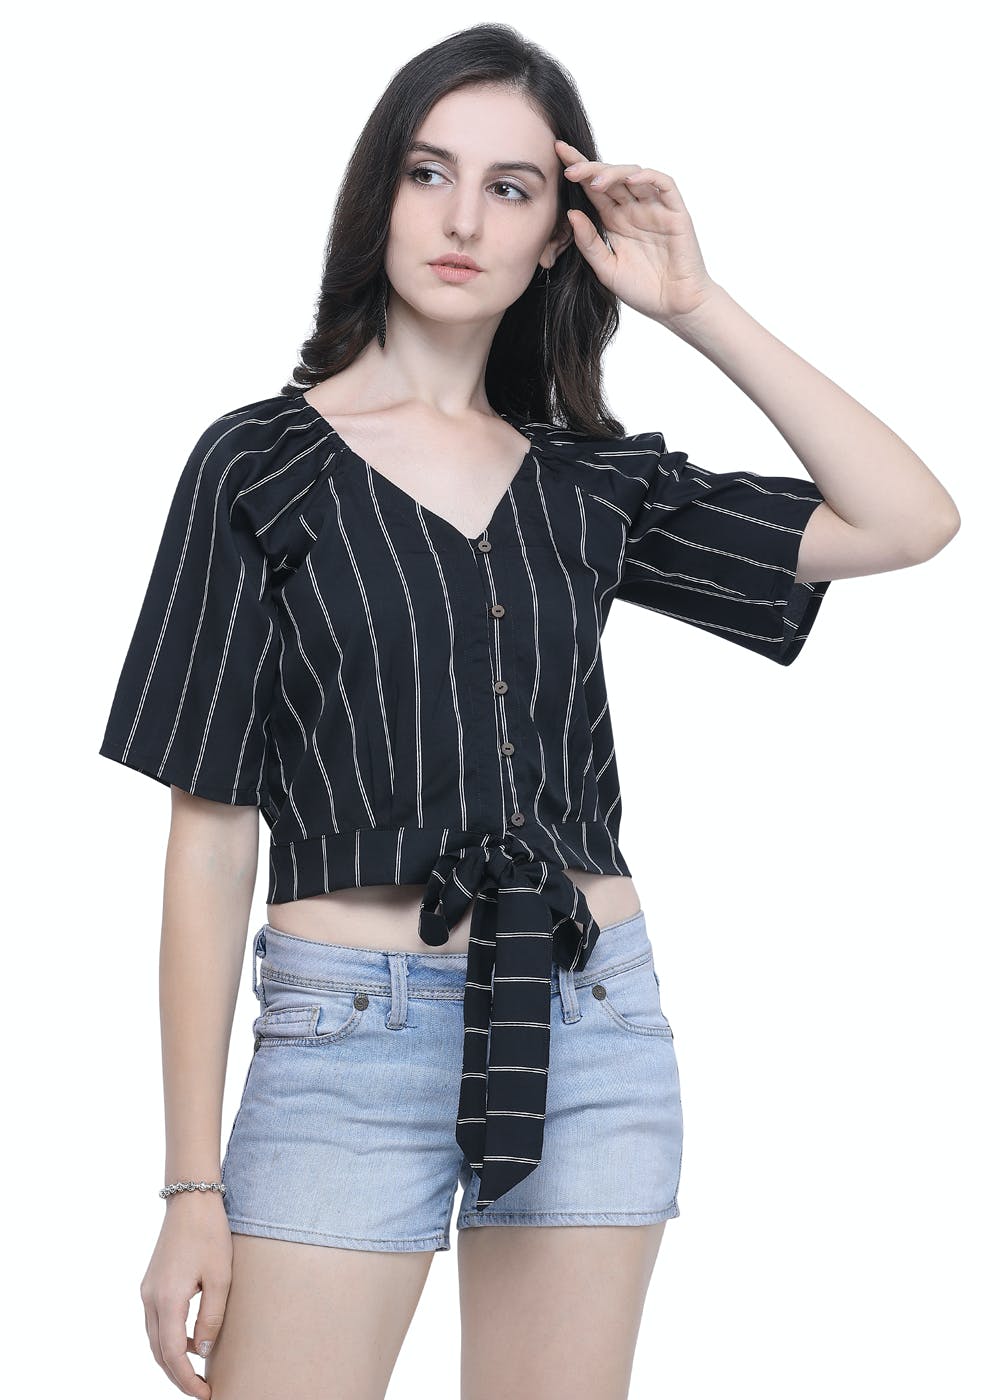 Get Hem Tie Detail Black Striped Crop Top at ₹ 549 | LBB Shop